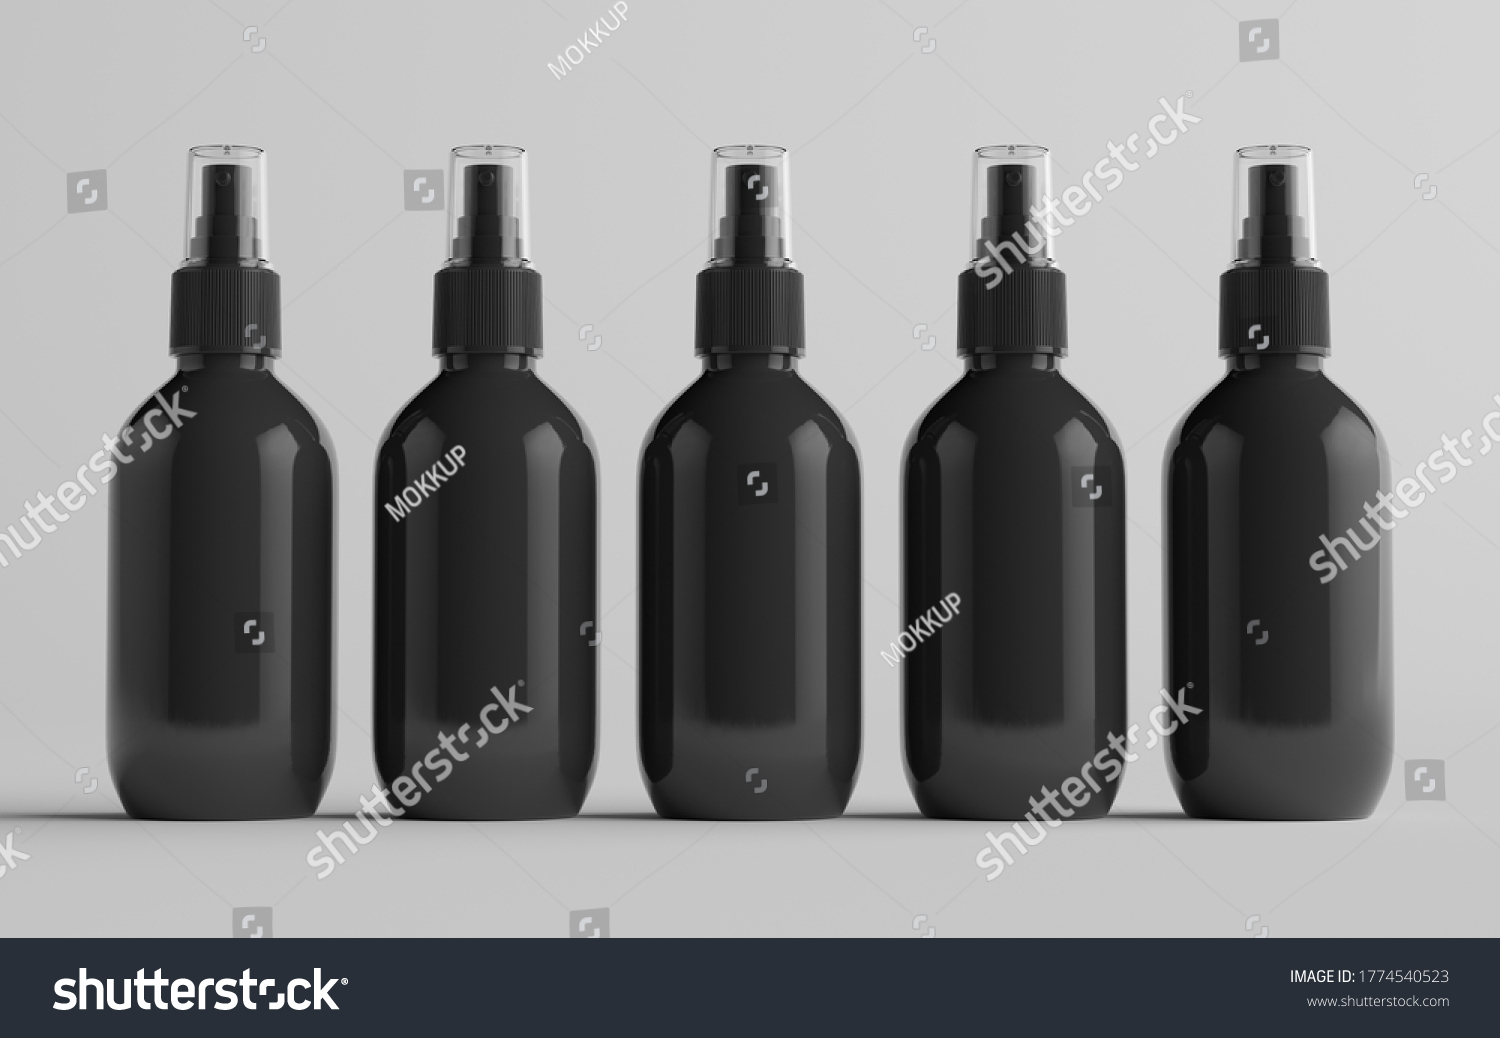 Download 200ml Black Plastic Spray Bottle Mockup Stock Illustration 1774540523